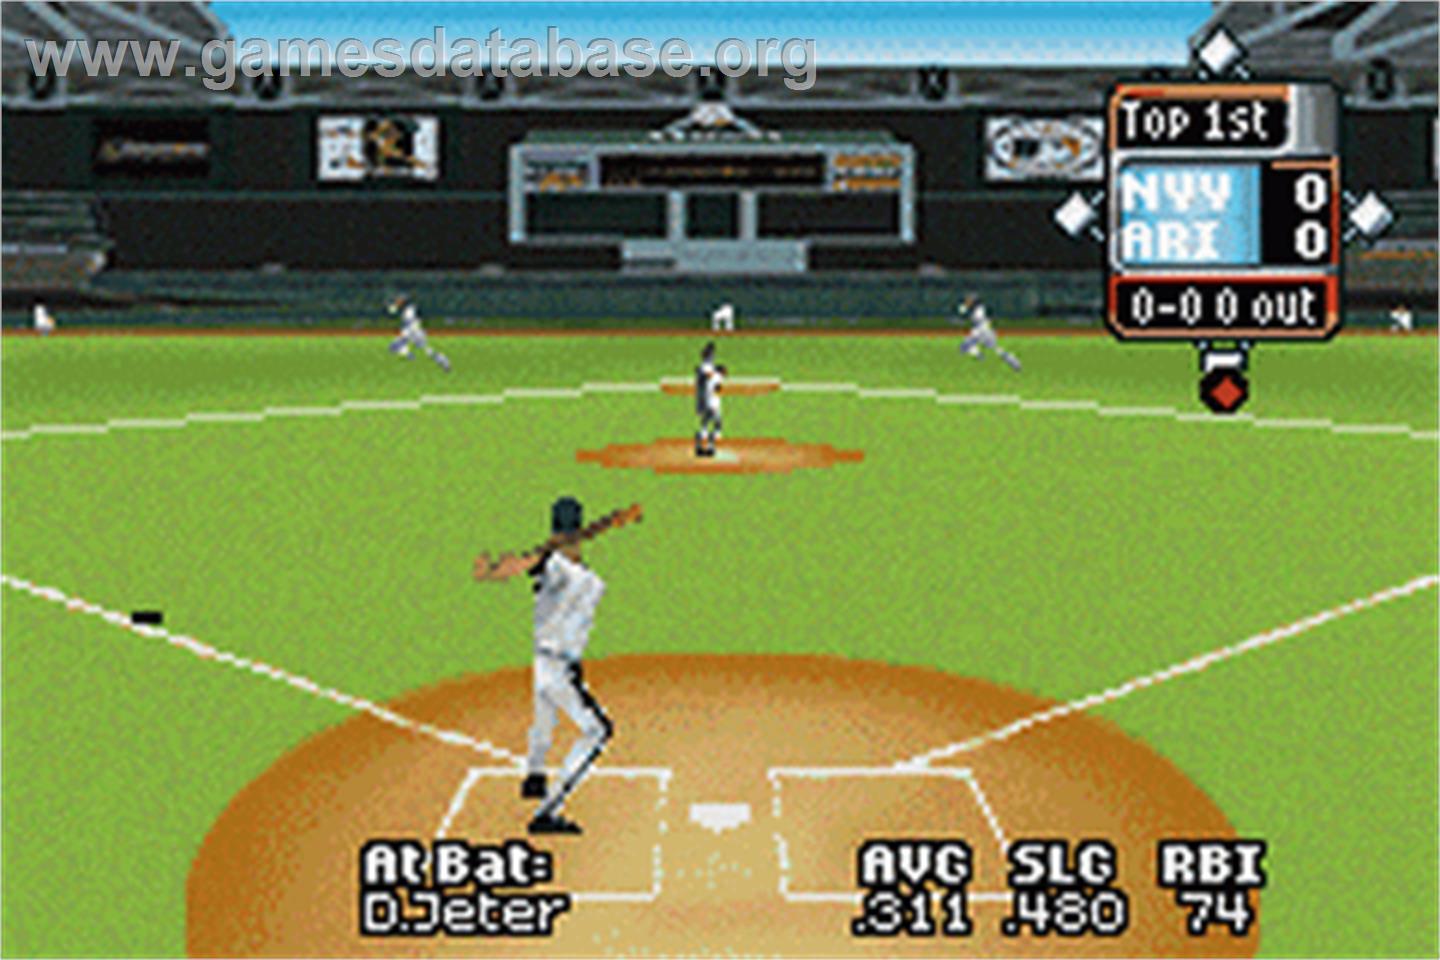 High Heat Major League Baseball 2003 - Nintendo Game Boy Advance - Artwork - In Game